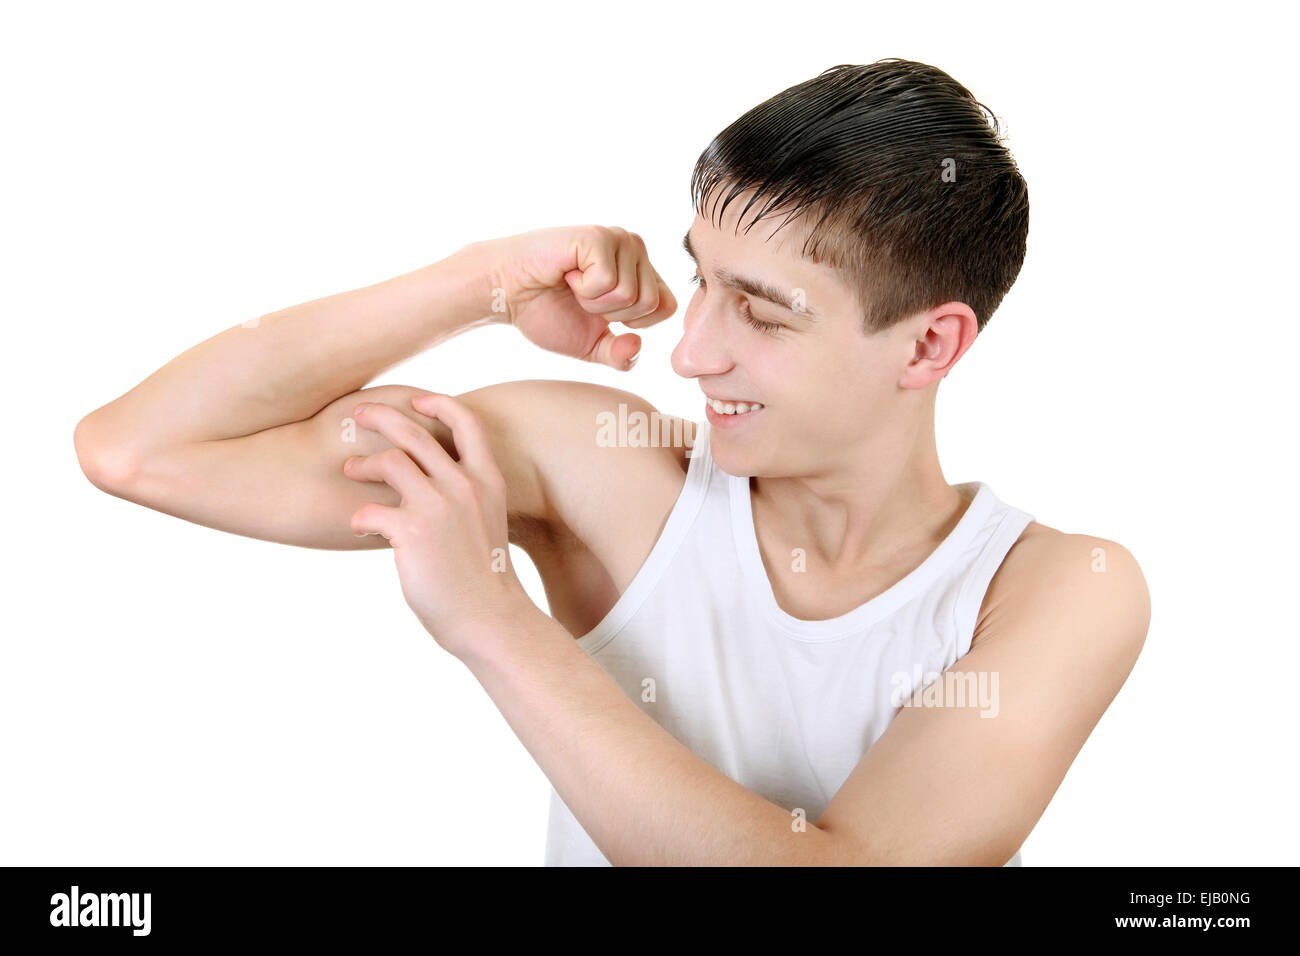 Teenager-Muskelspiel Stockfoto